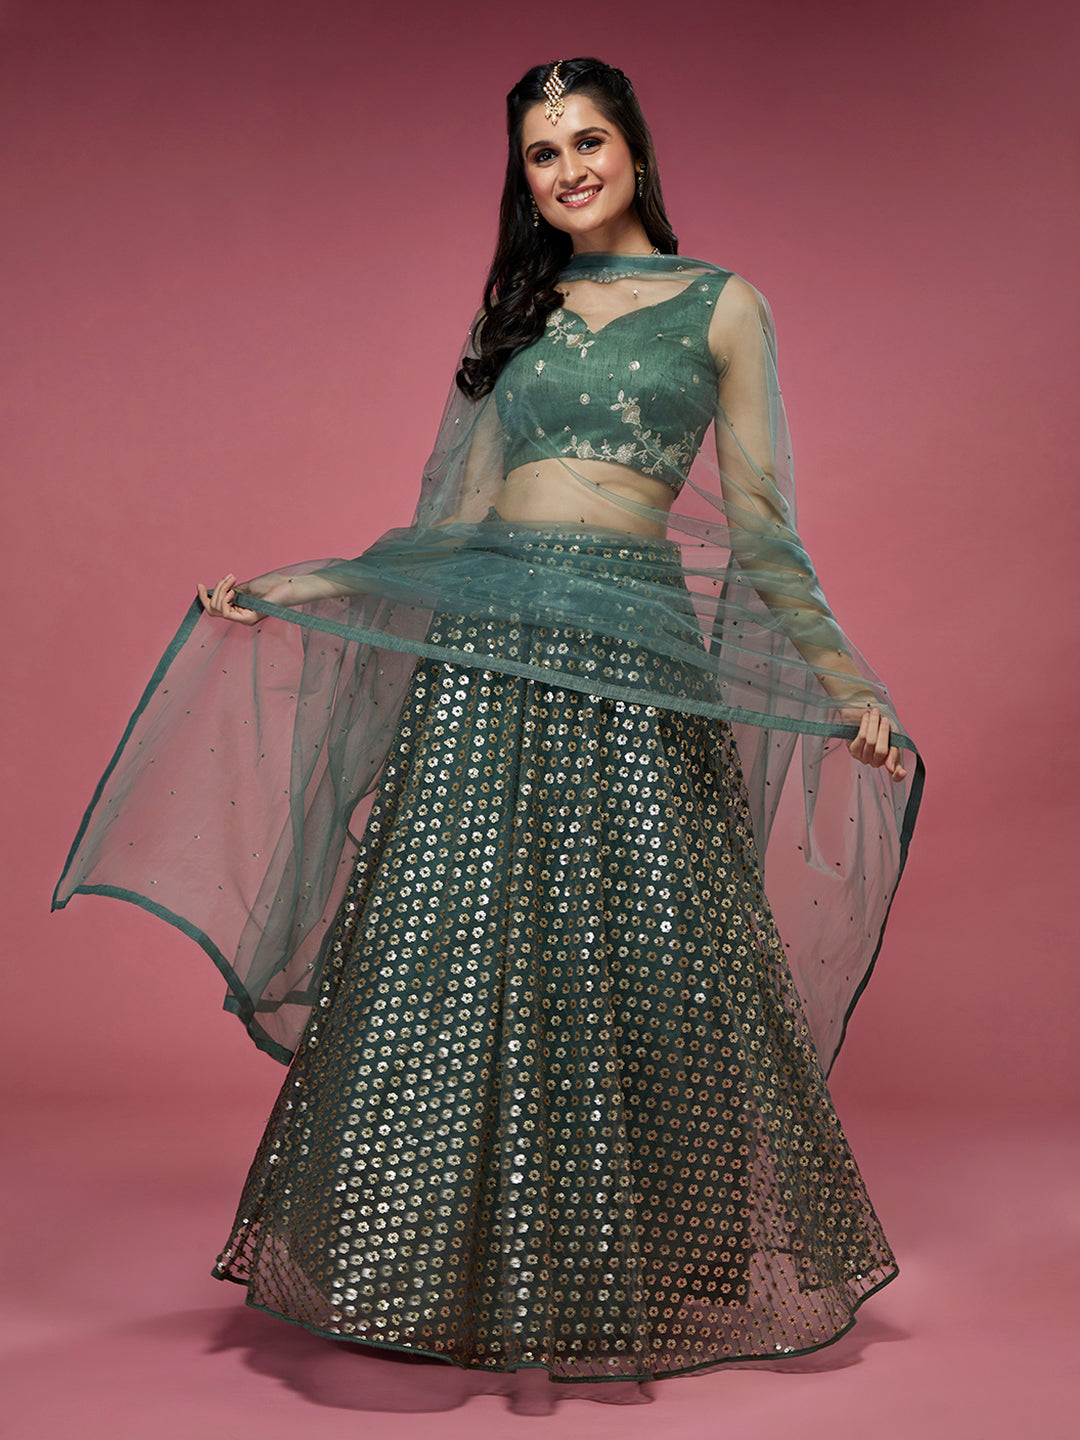 Lehenga saree/half saree | Half saree lehenga, Half saree designs, Indian  fashion